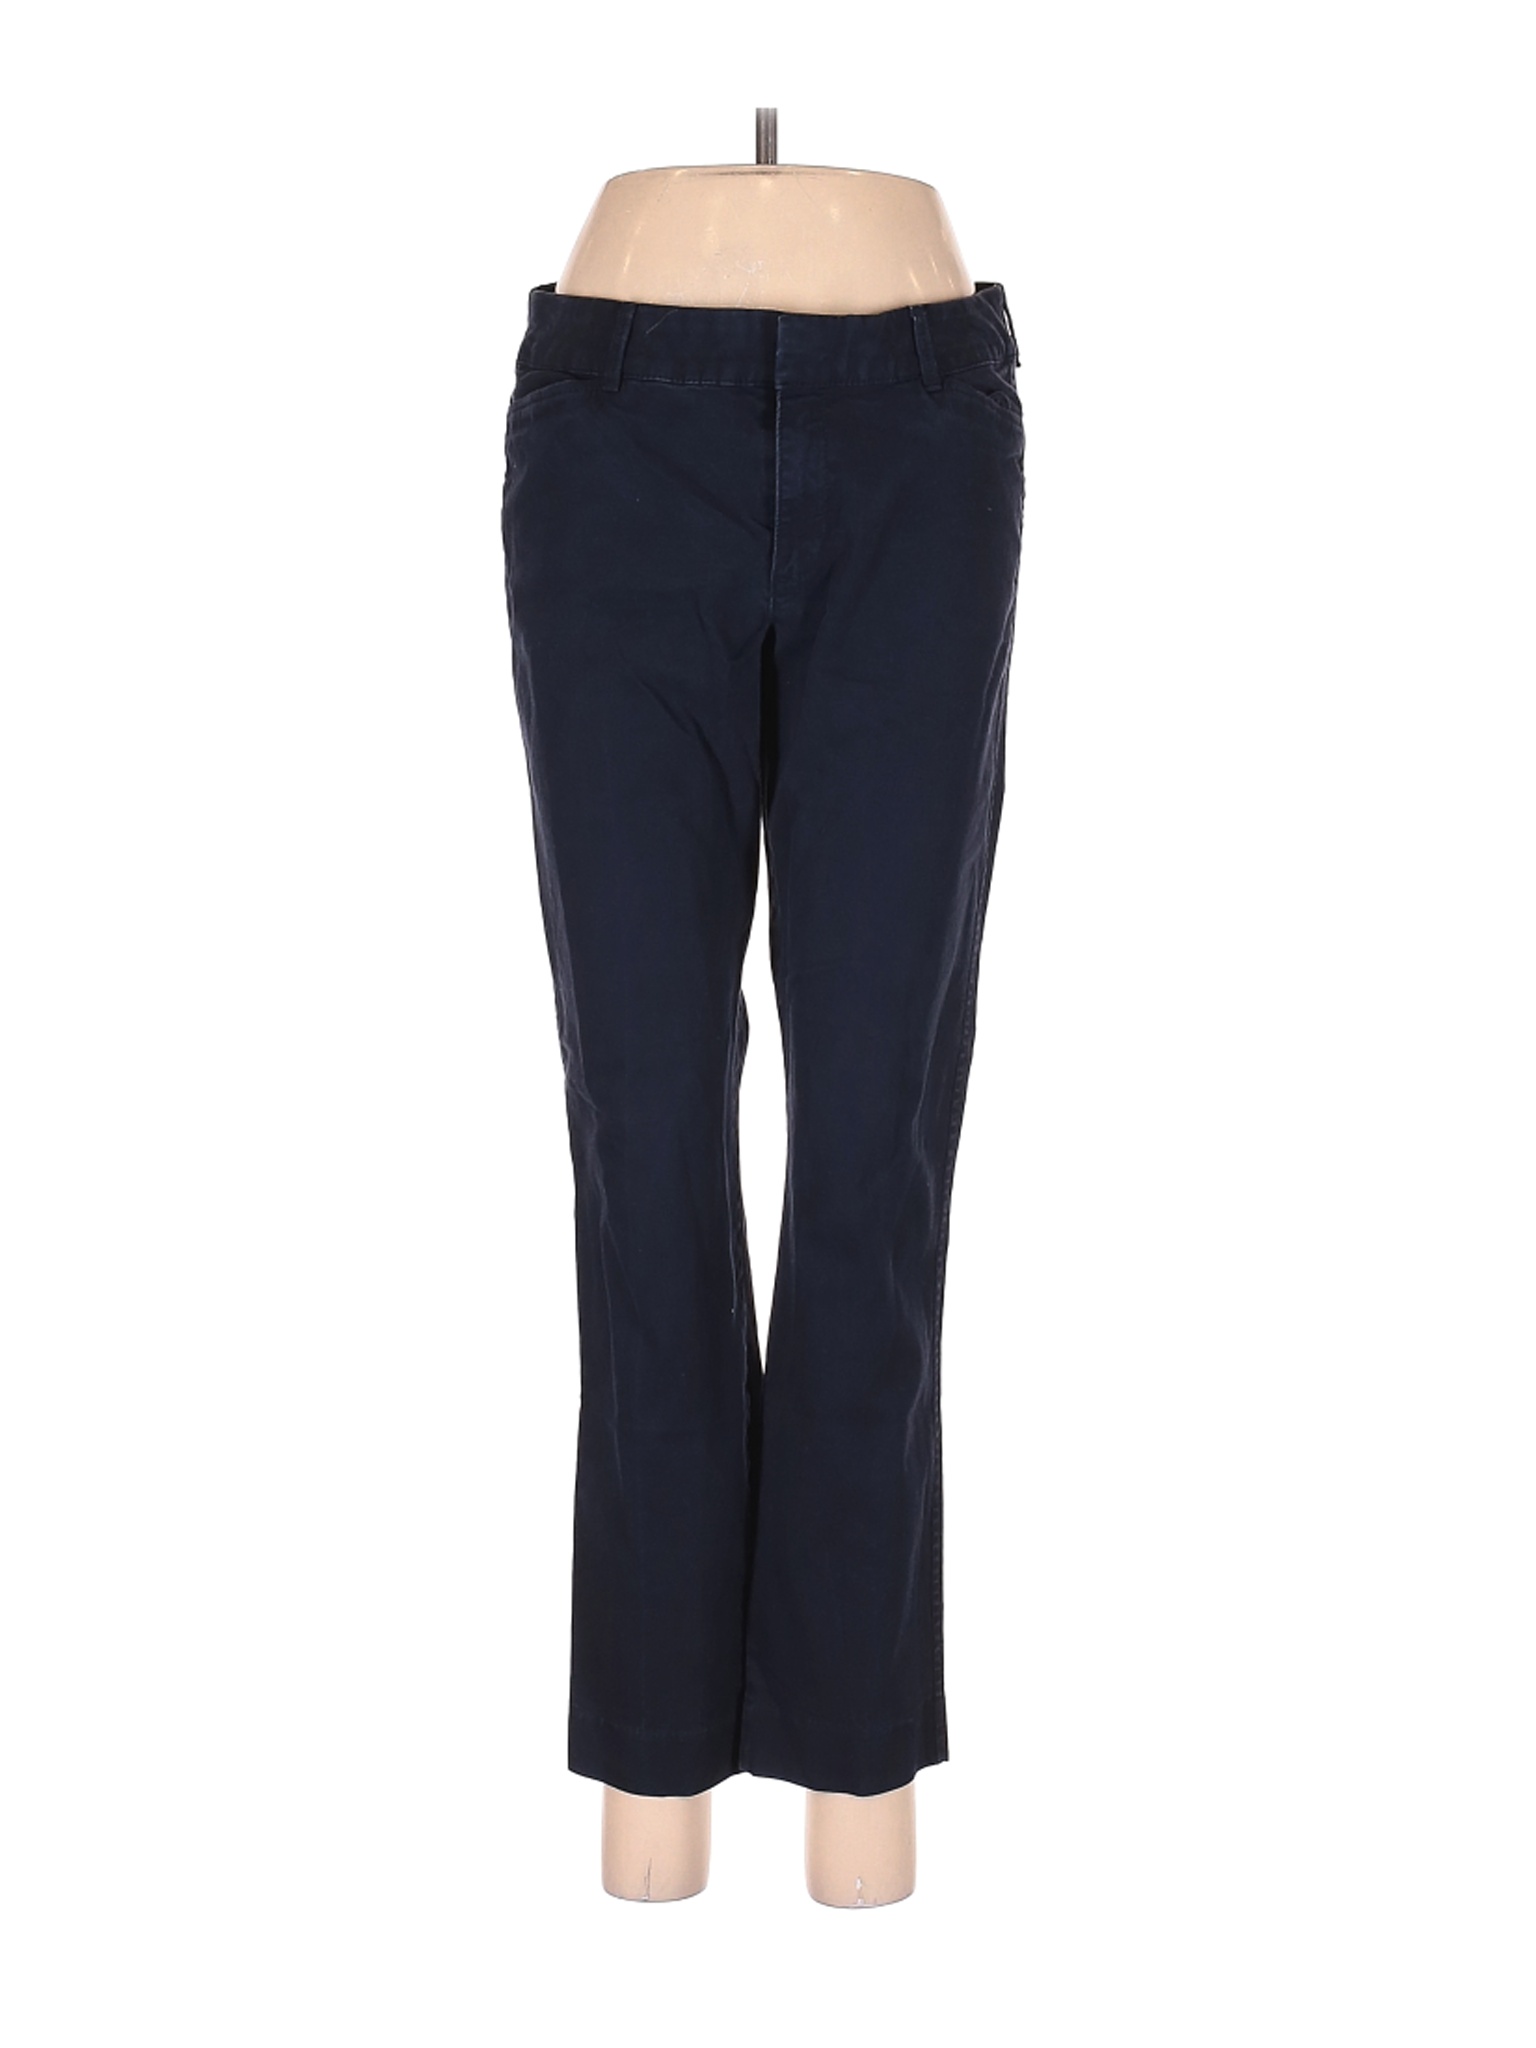 Old Navy Women Blue Casual Pants 8 | eBay